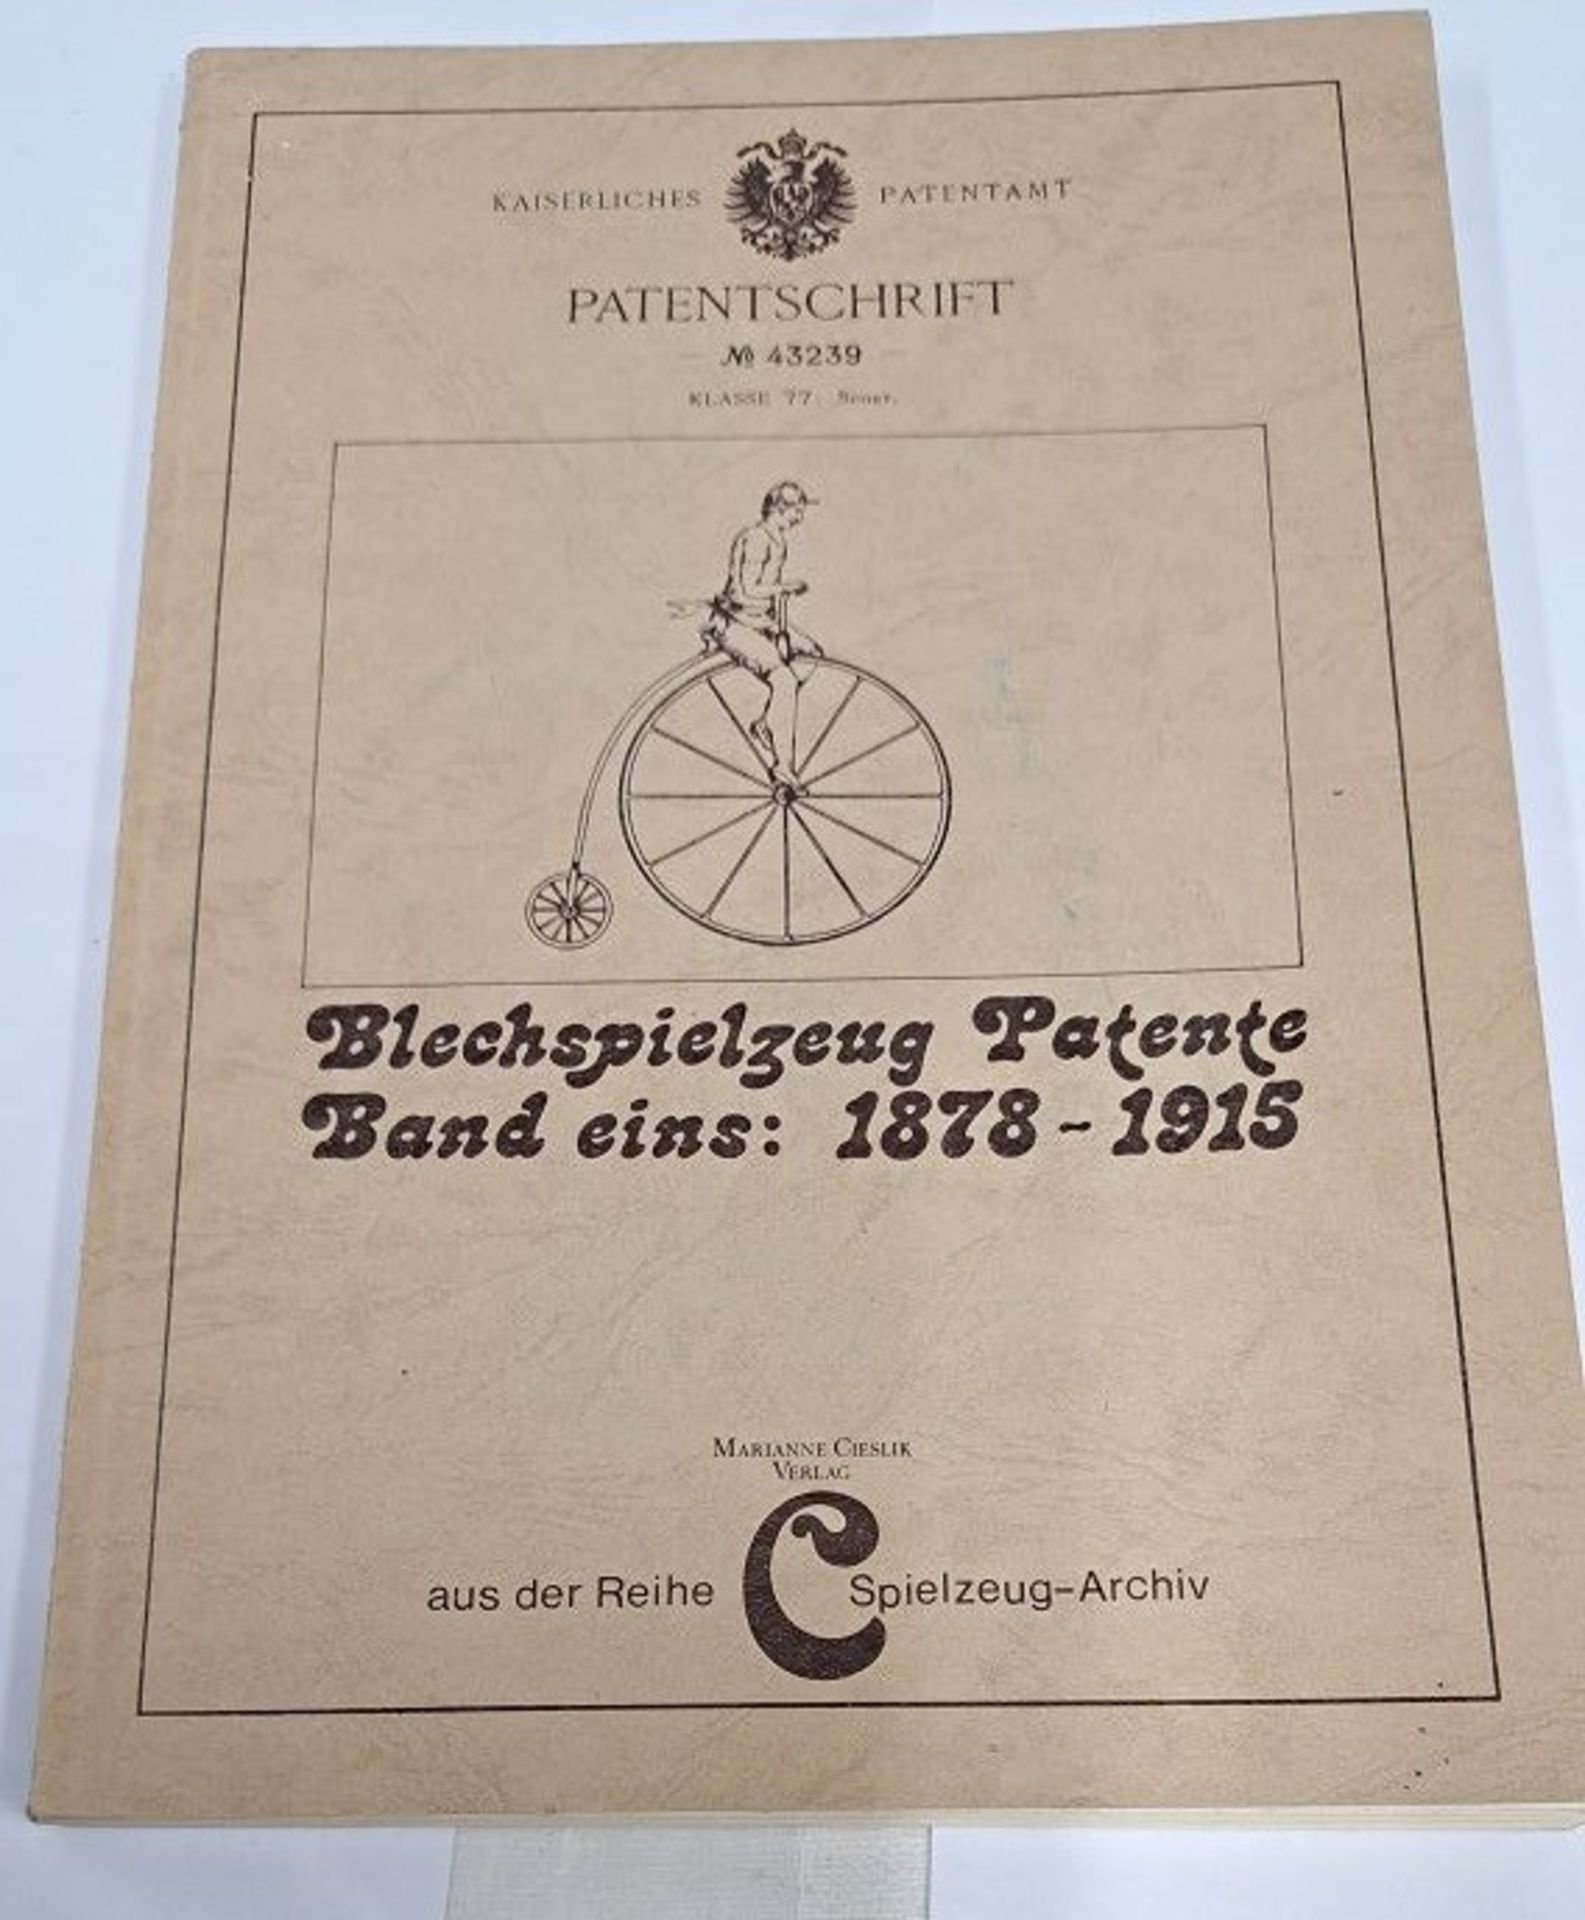 Blechspielzeug Patente Band eins 1878 - 1915 - Image 3 of 3